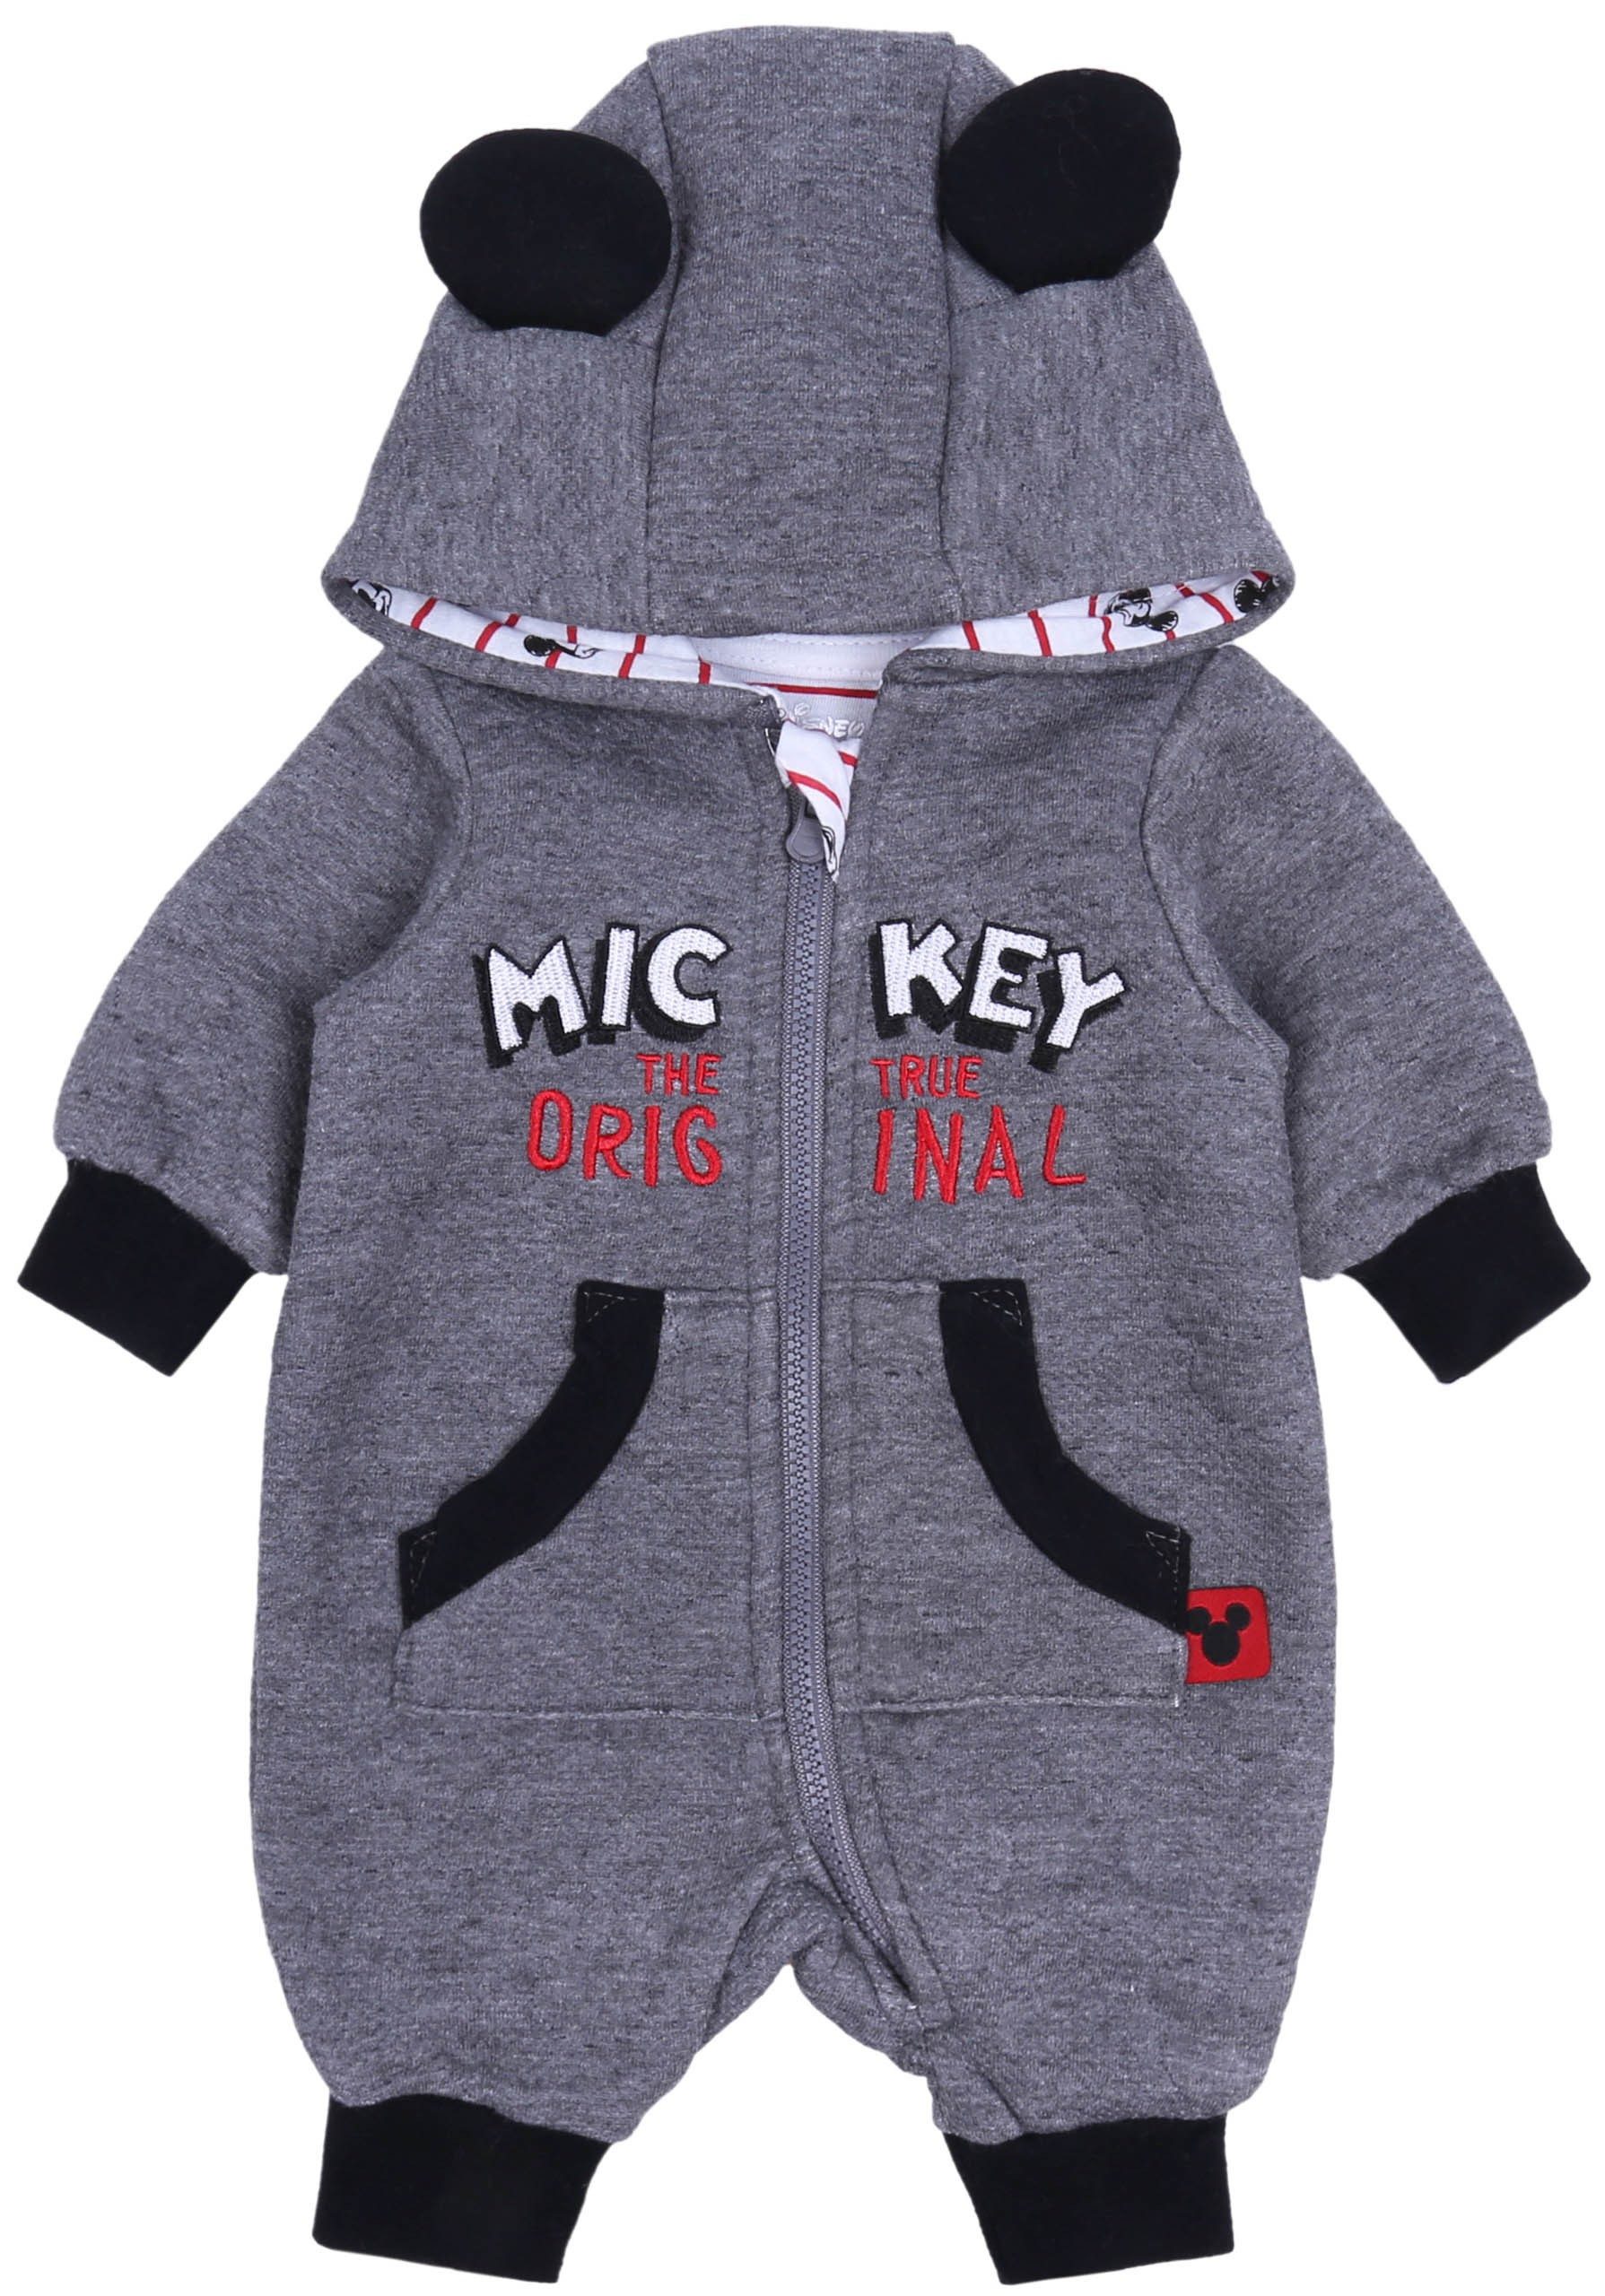 Sarcia.eu Strampler Grauer Trainingsanzug für Baby mit Kapuze Mickey Mouse 12-18 Monate